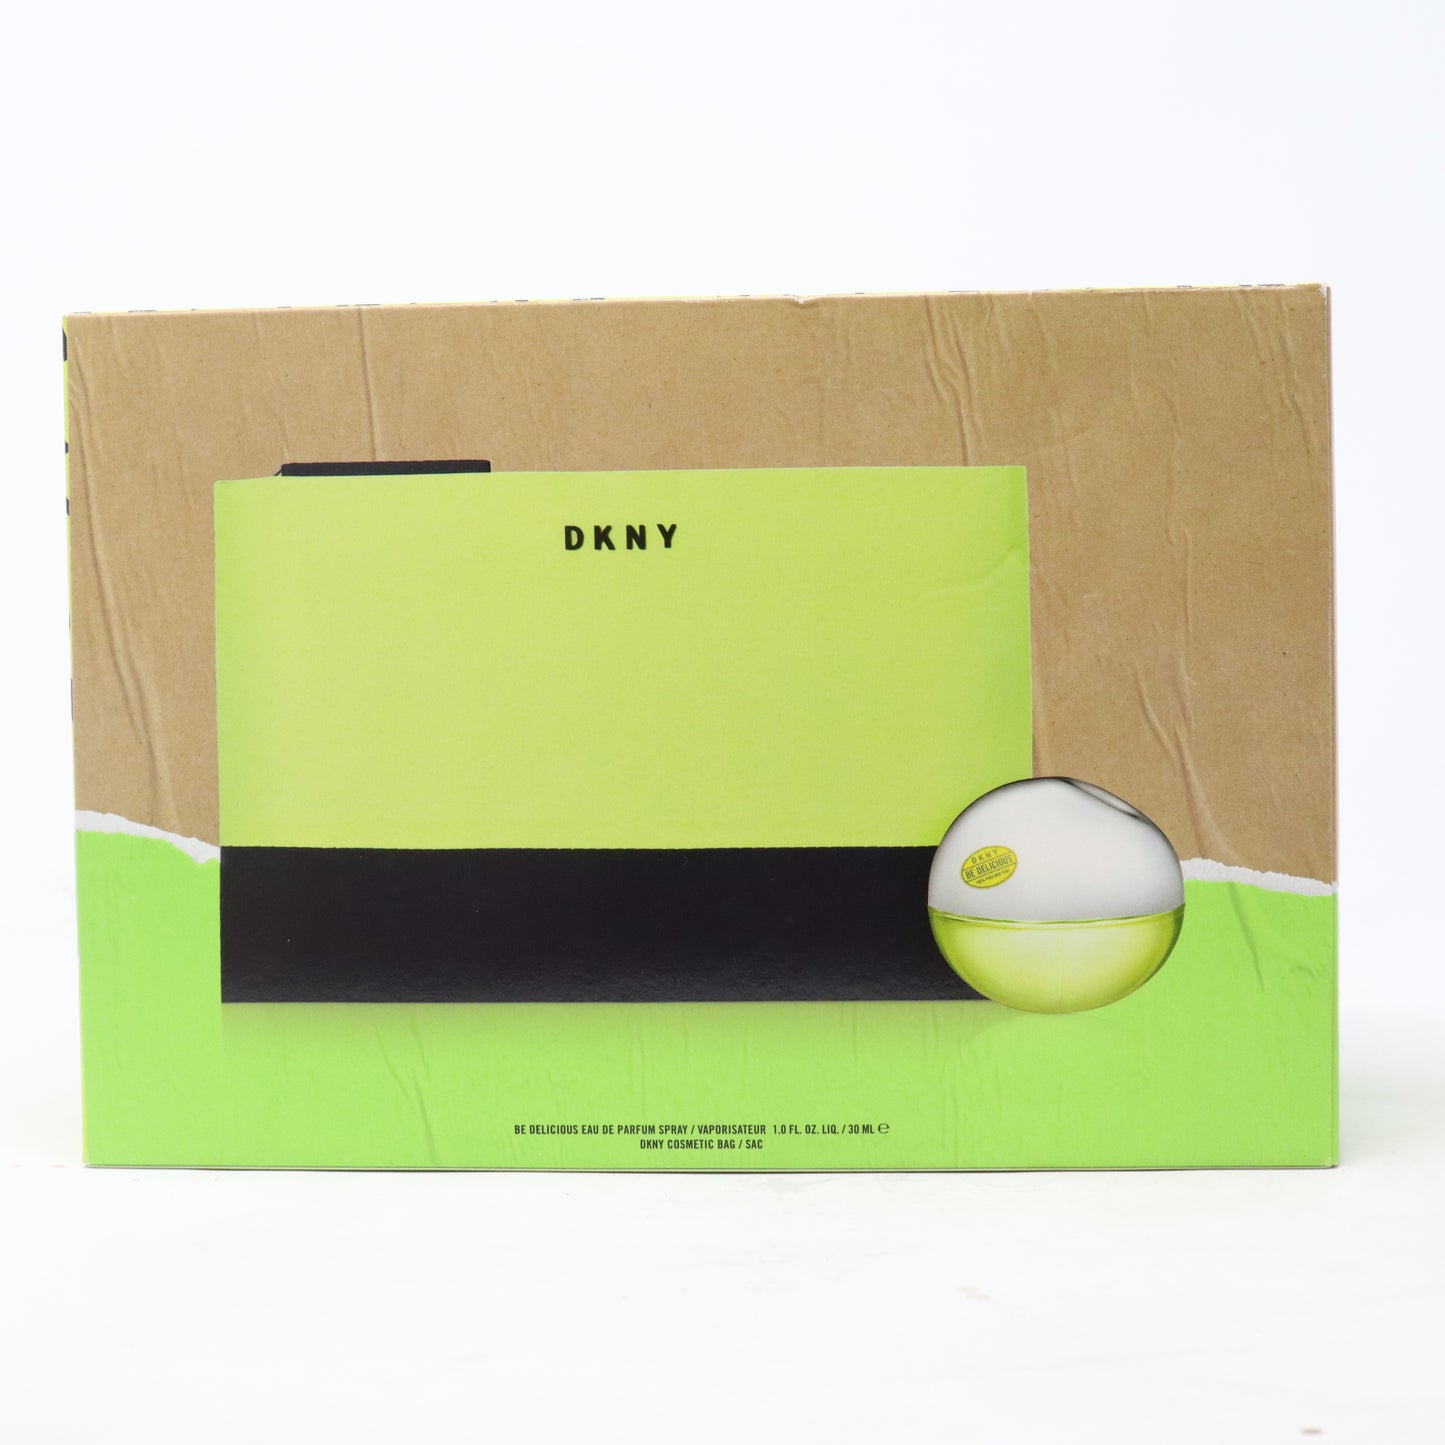 Be Delicious by Donna Karan Eau De Parfum / Dkny Bag 1.0oz Spray New With Box